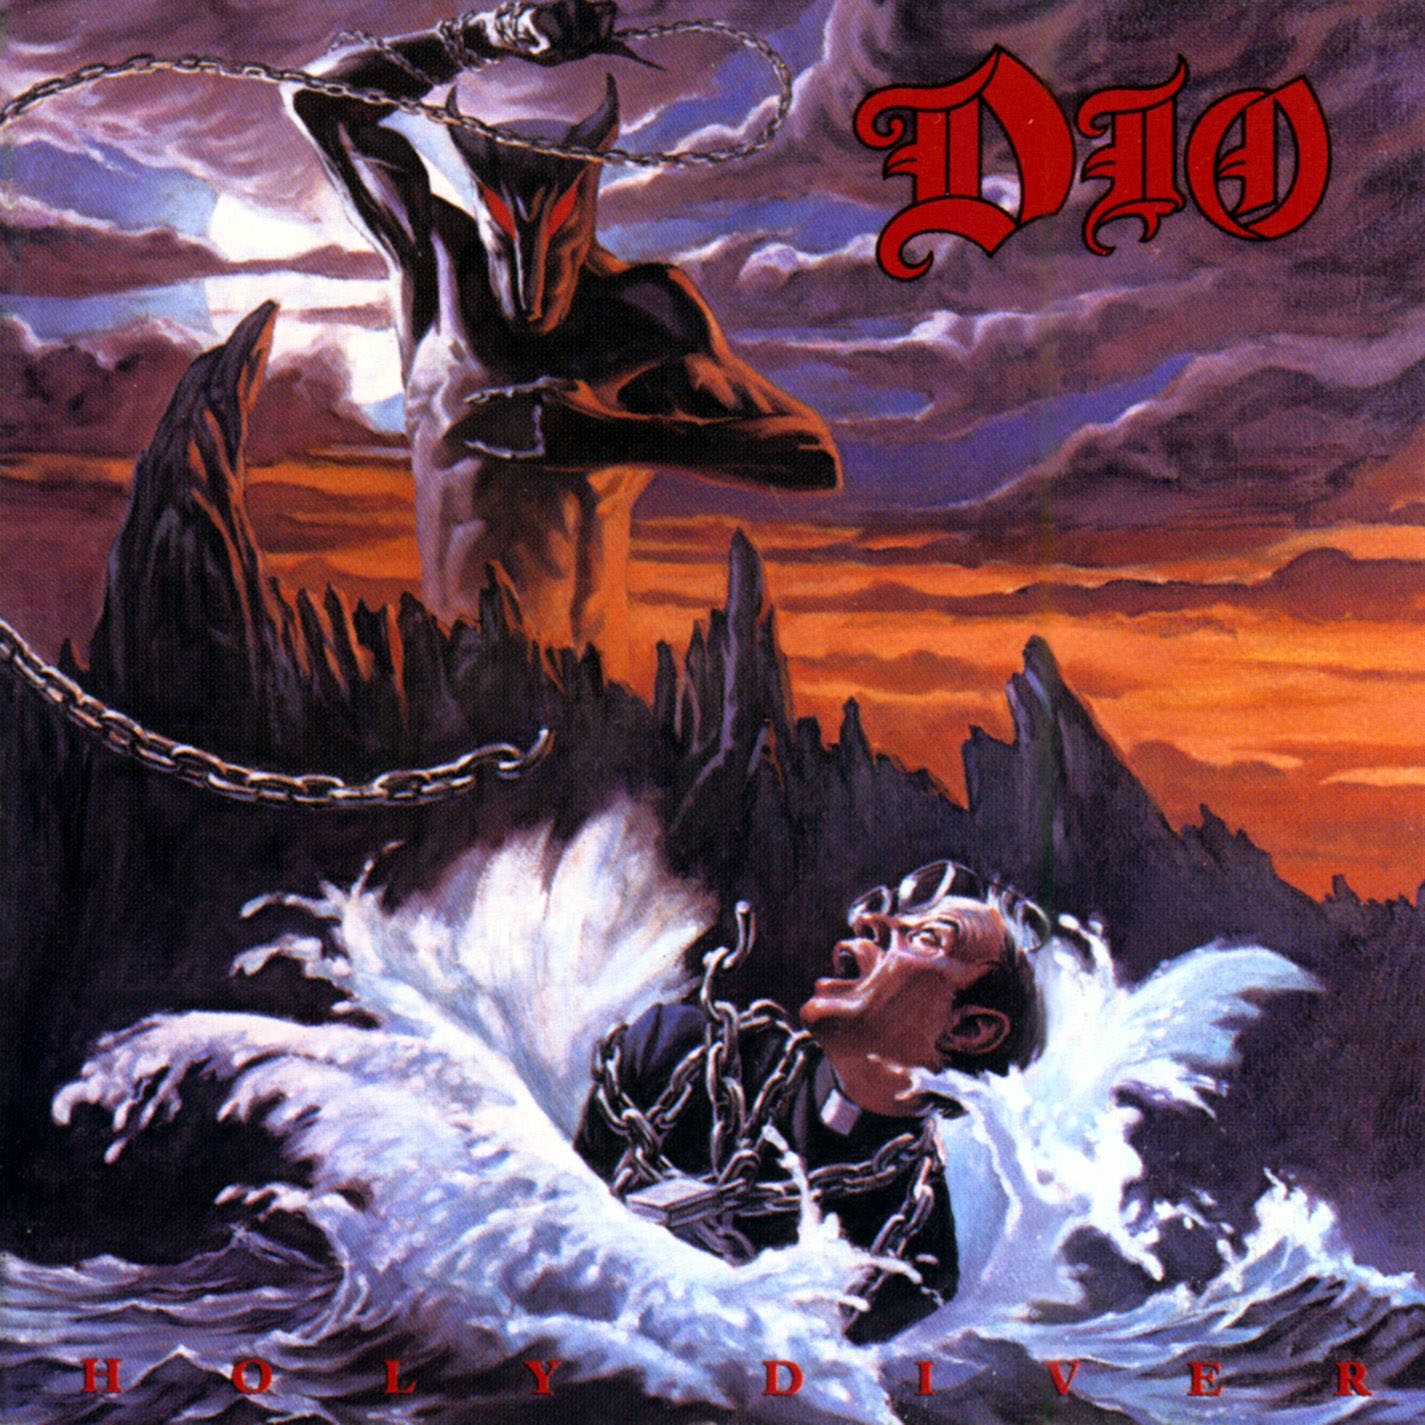 Dio - Holy Diver (1983/2015) [HDTracks FLAC 24bit/96kHz]